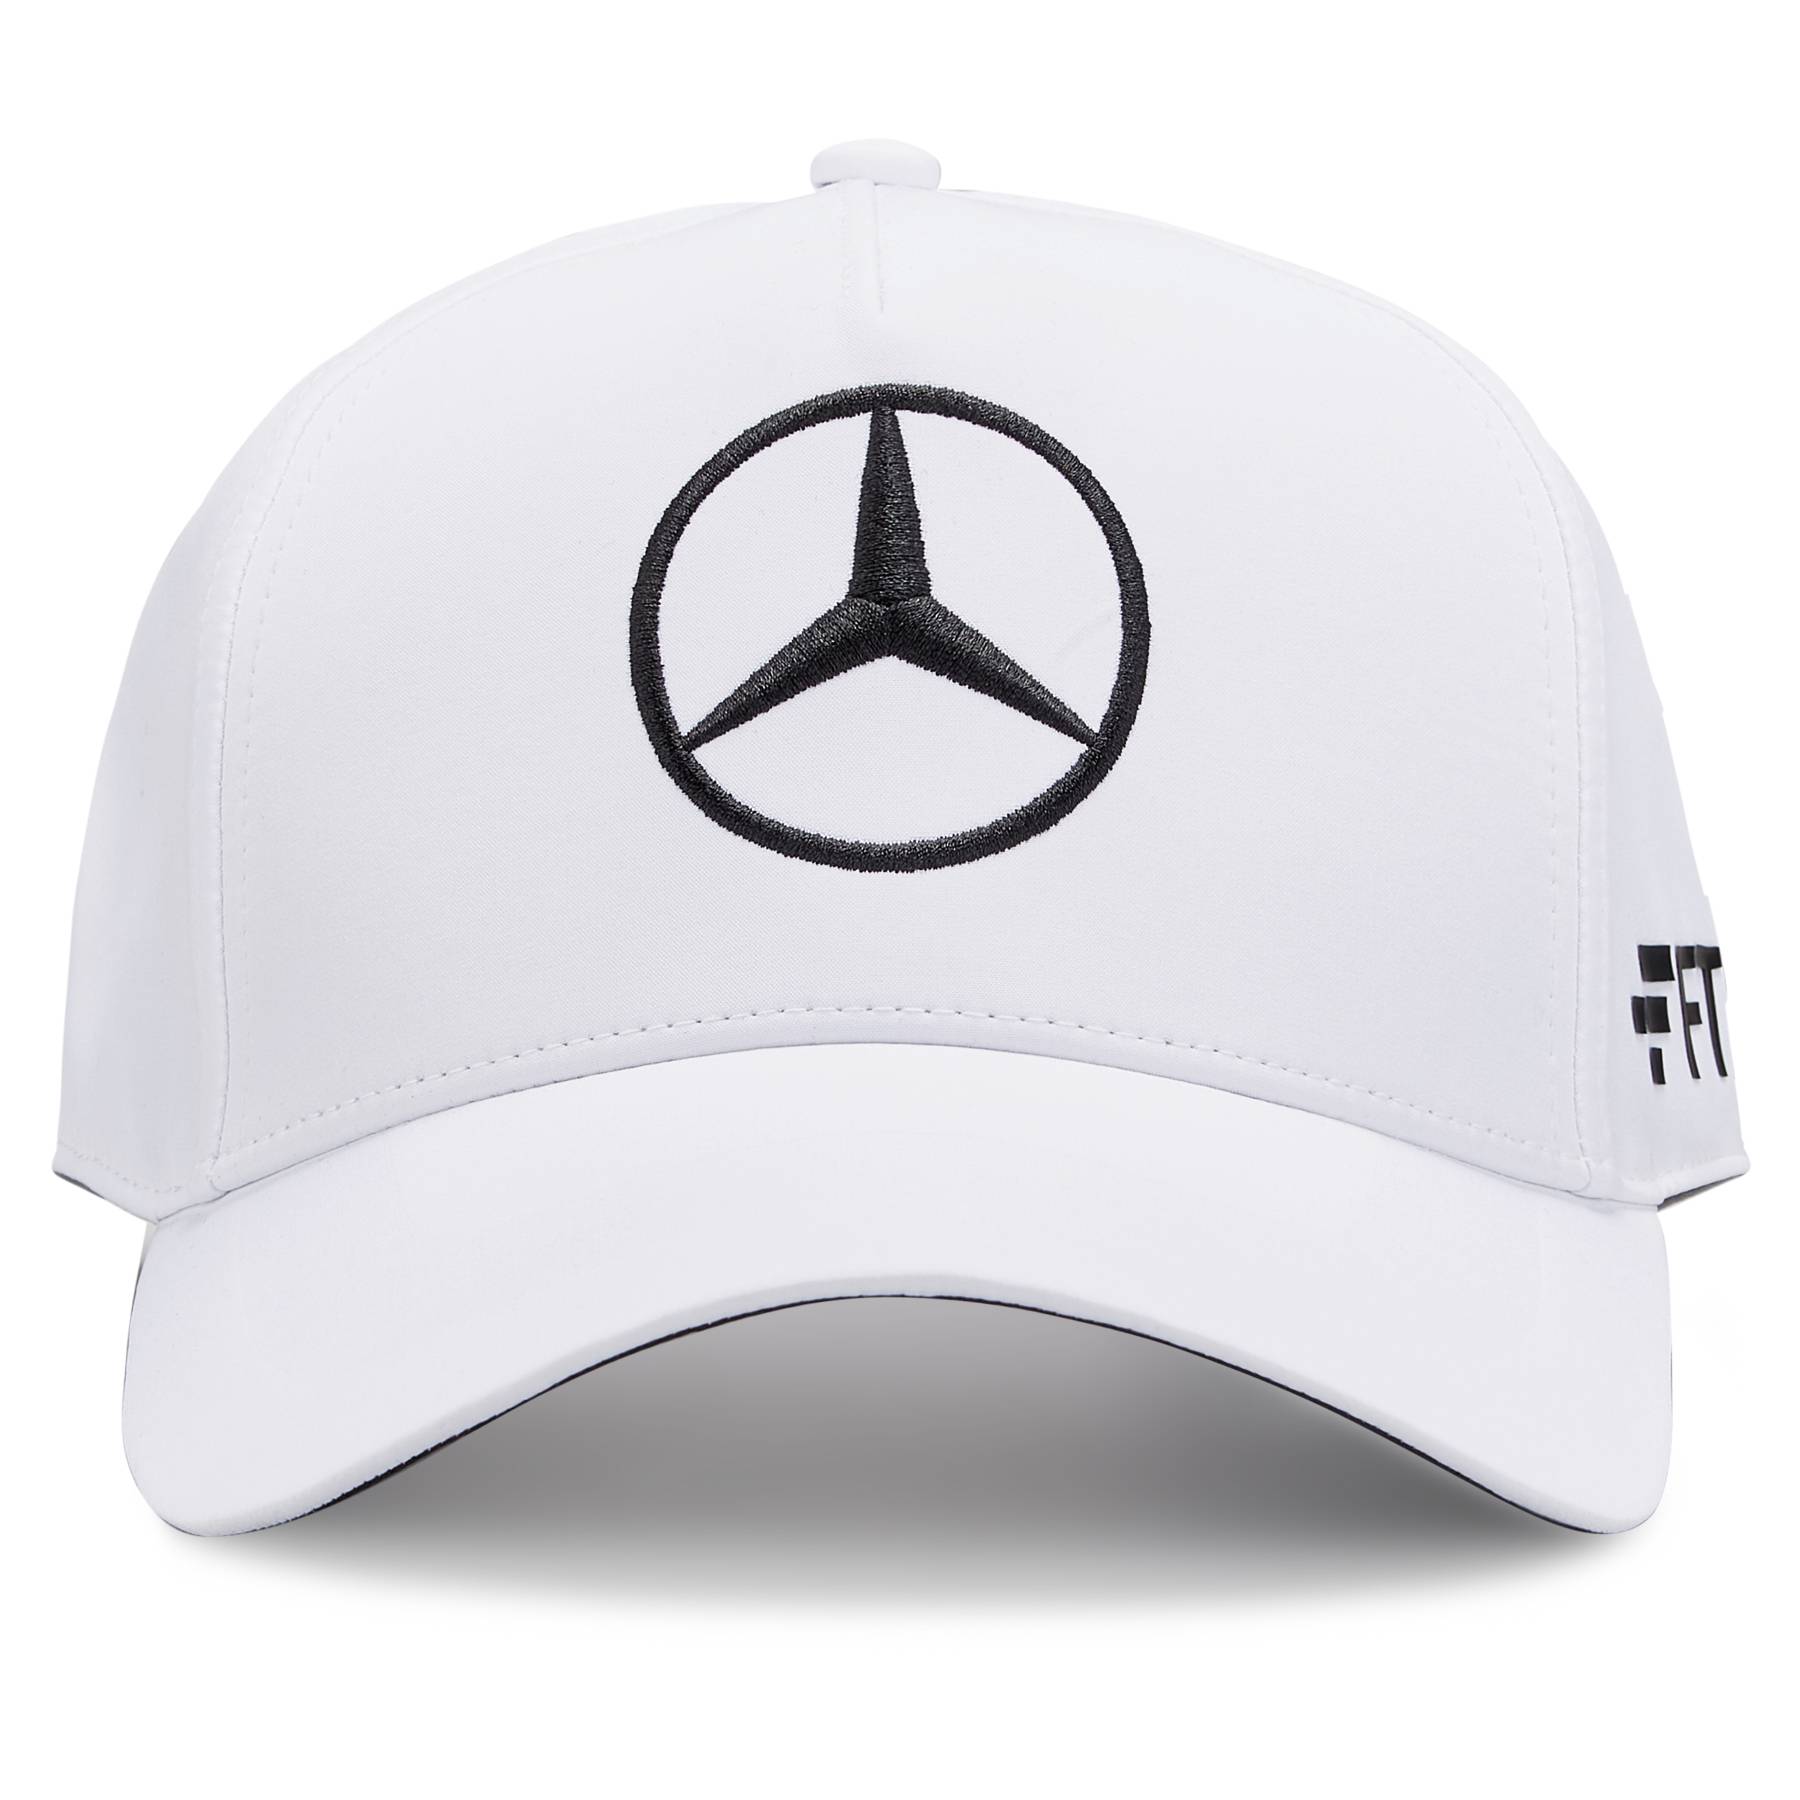 Mercedes AMG George Russel cap 2022 - white